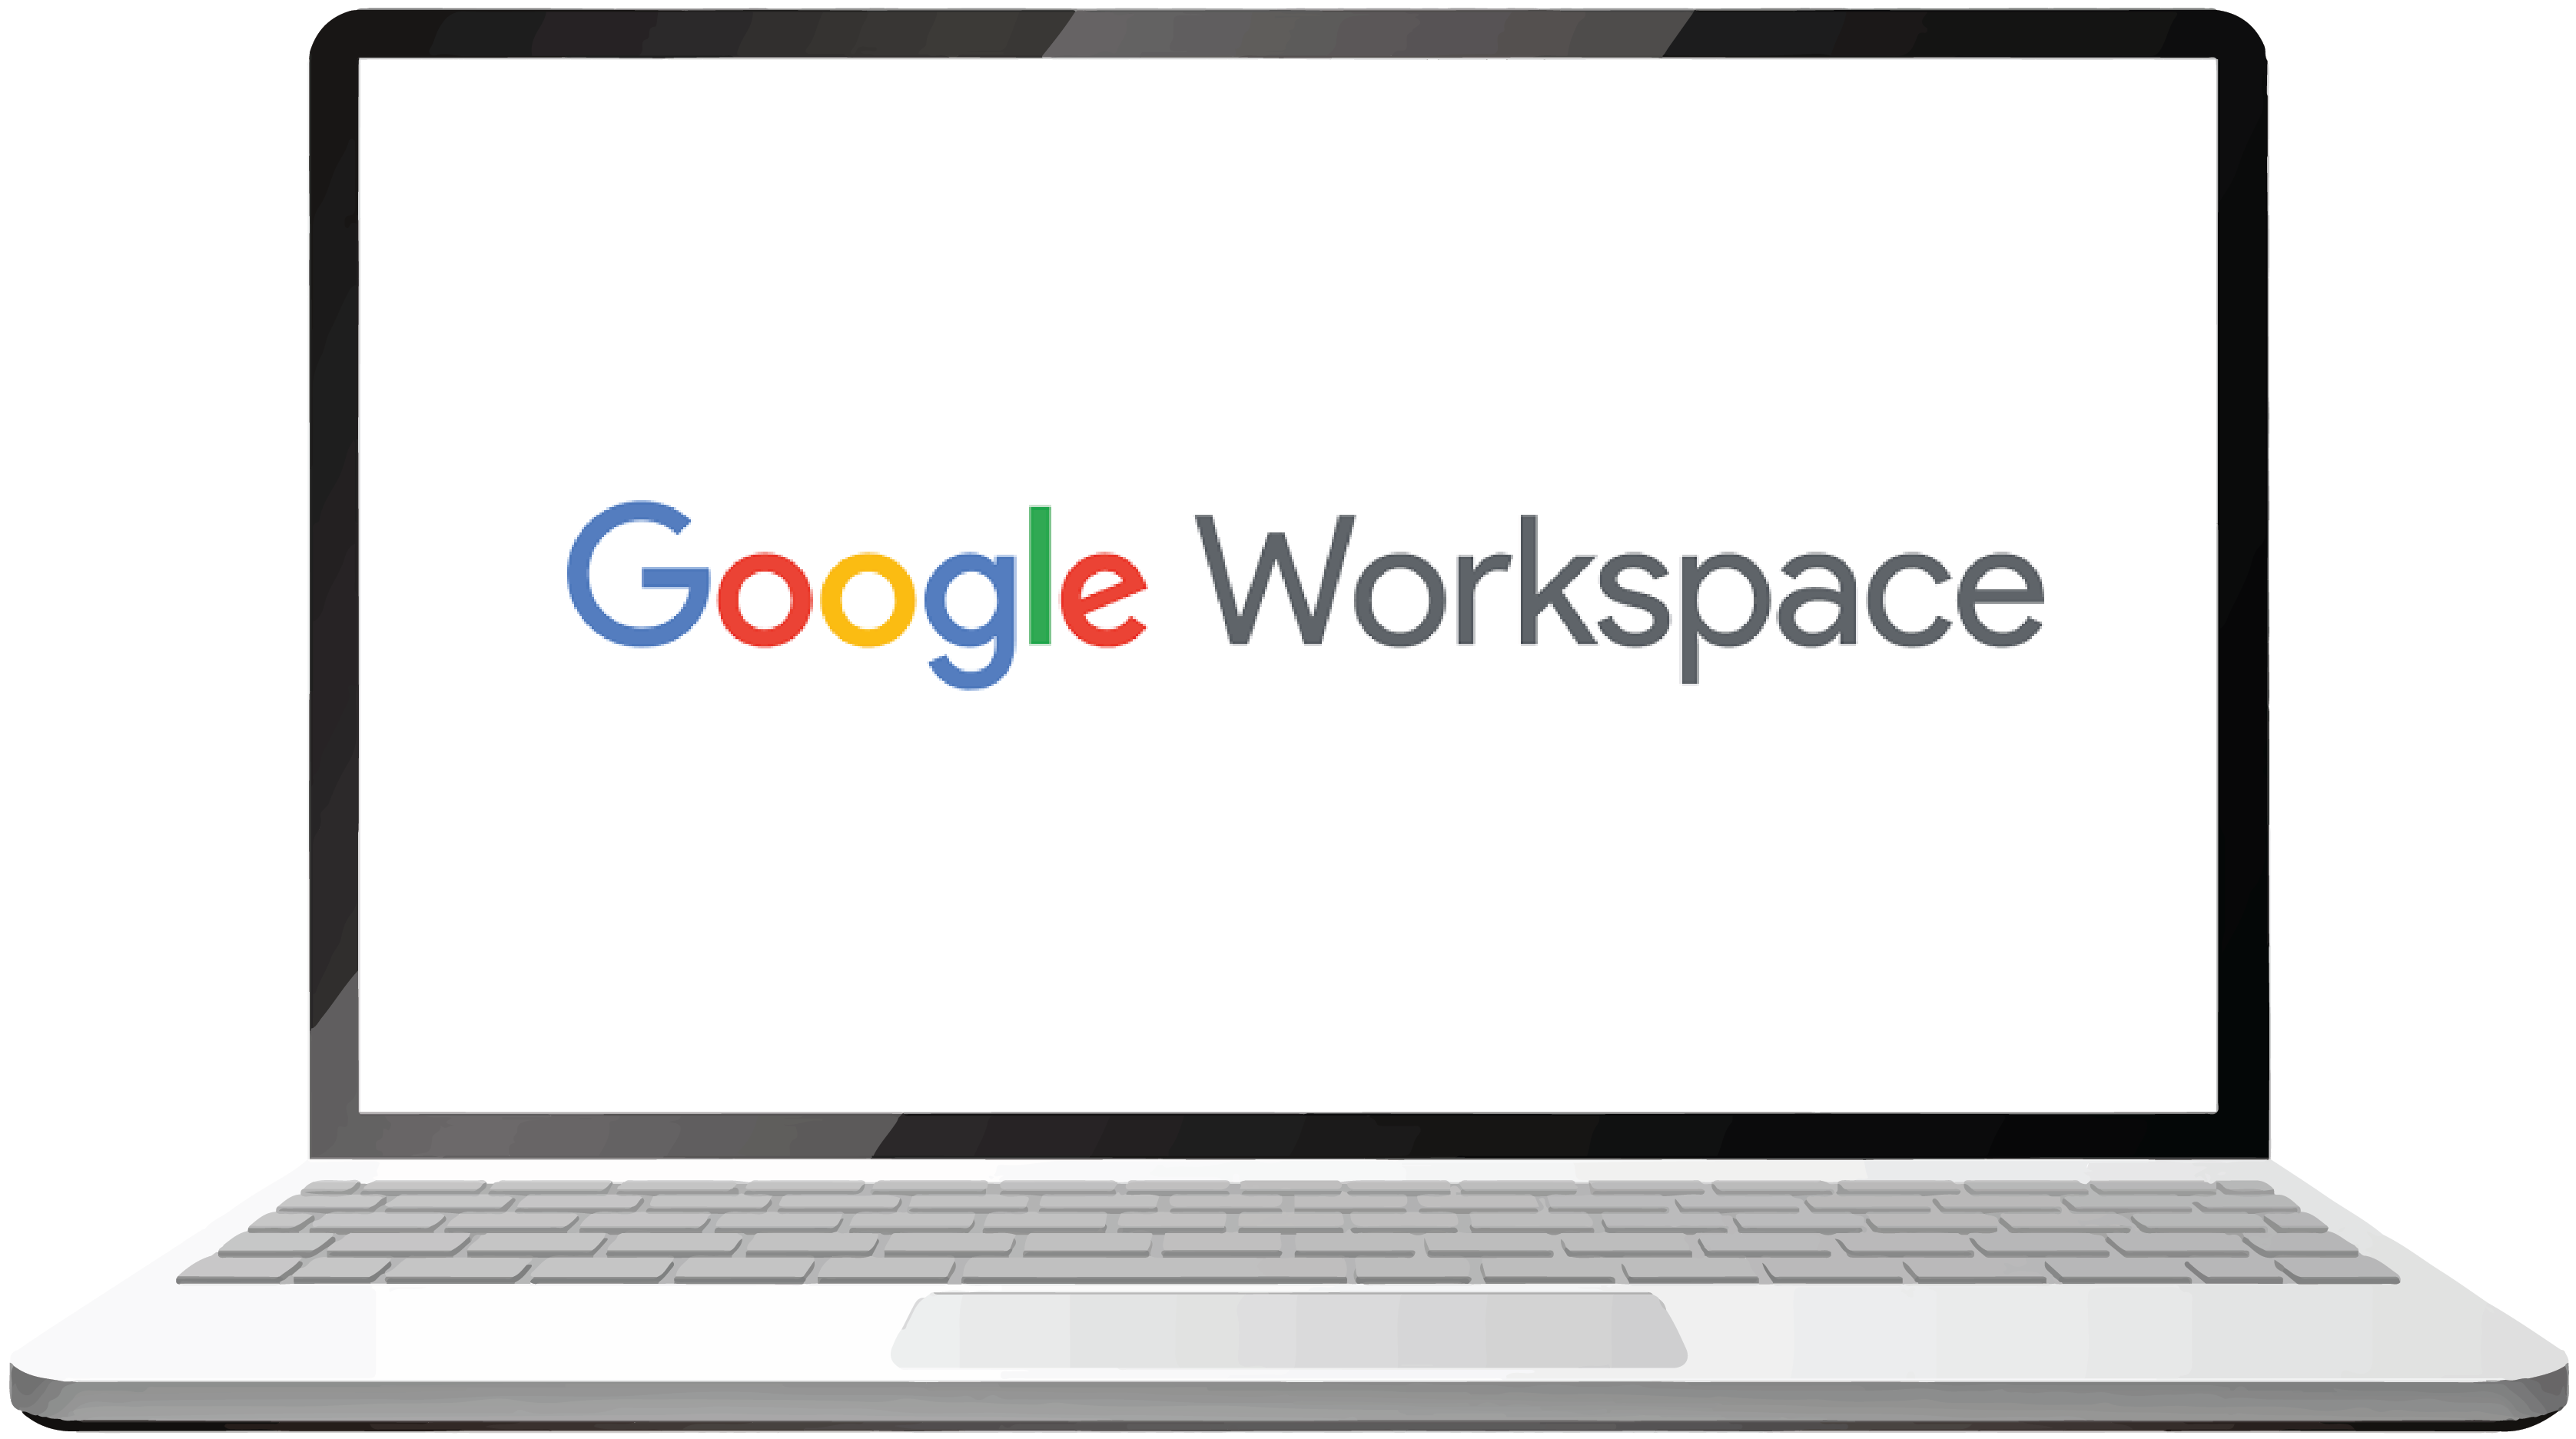 Google Workspace on laptop